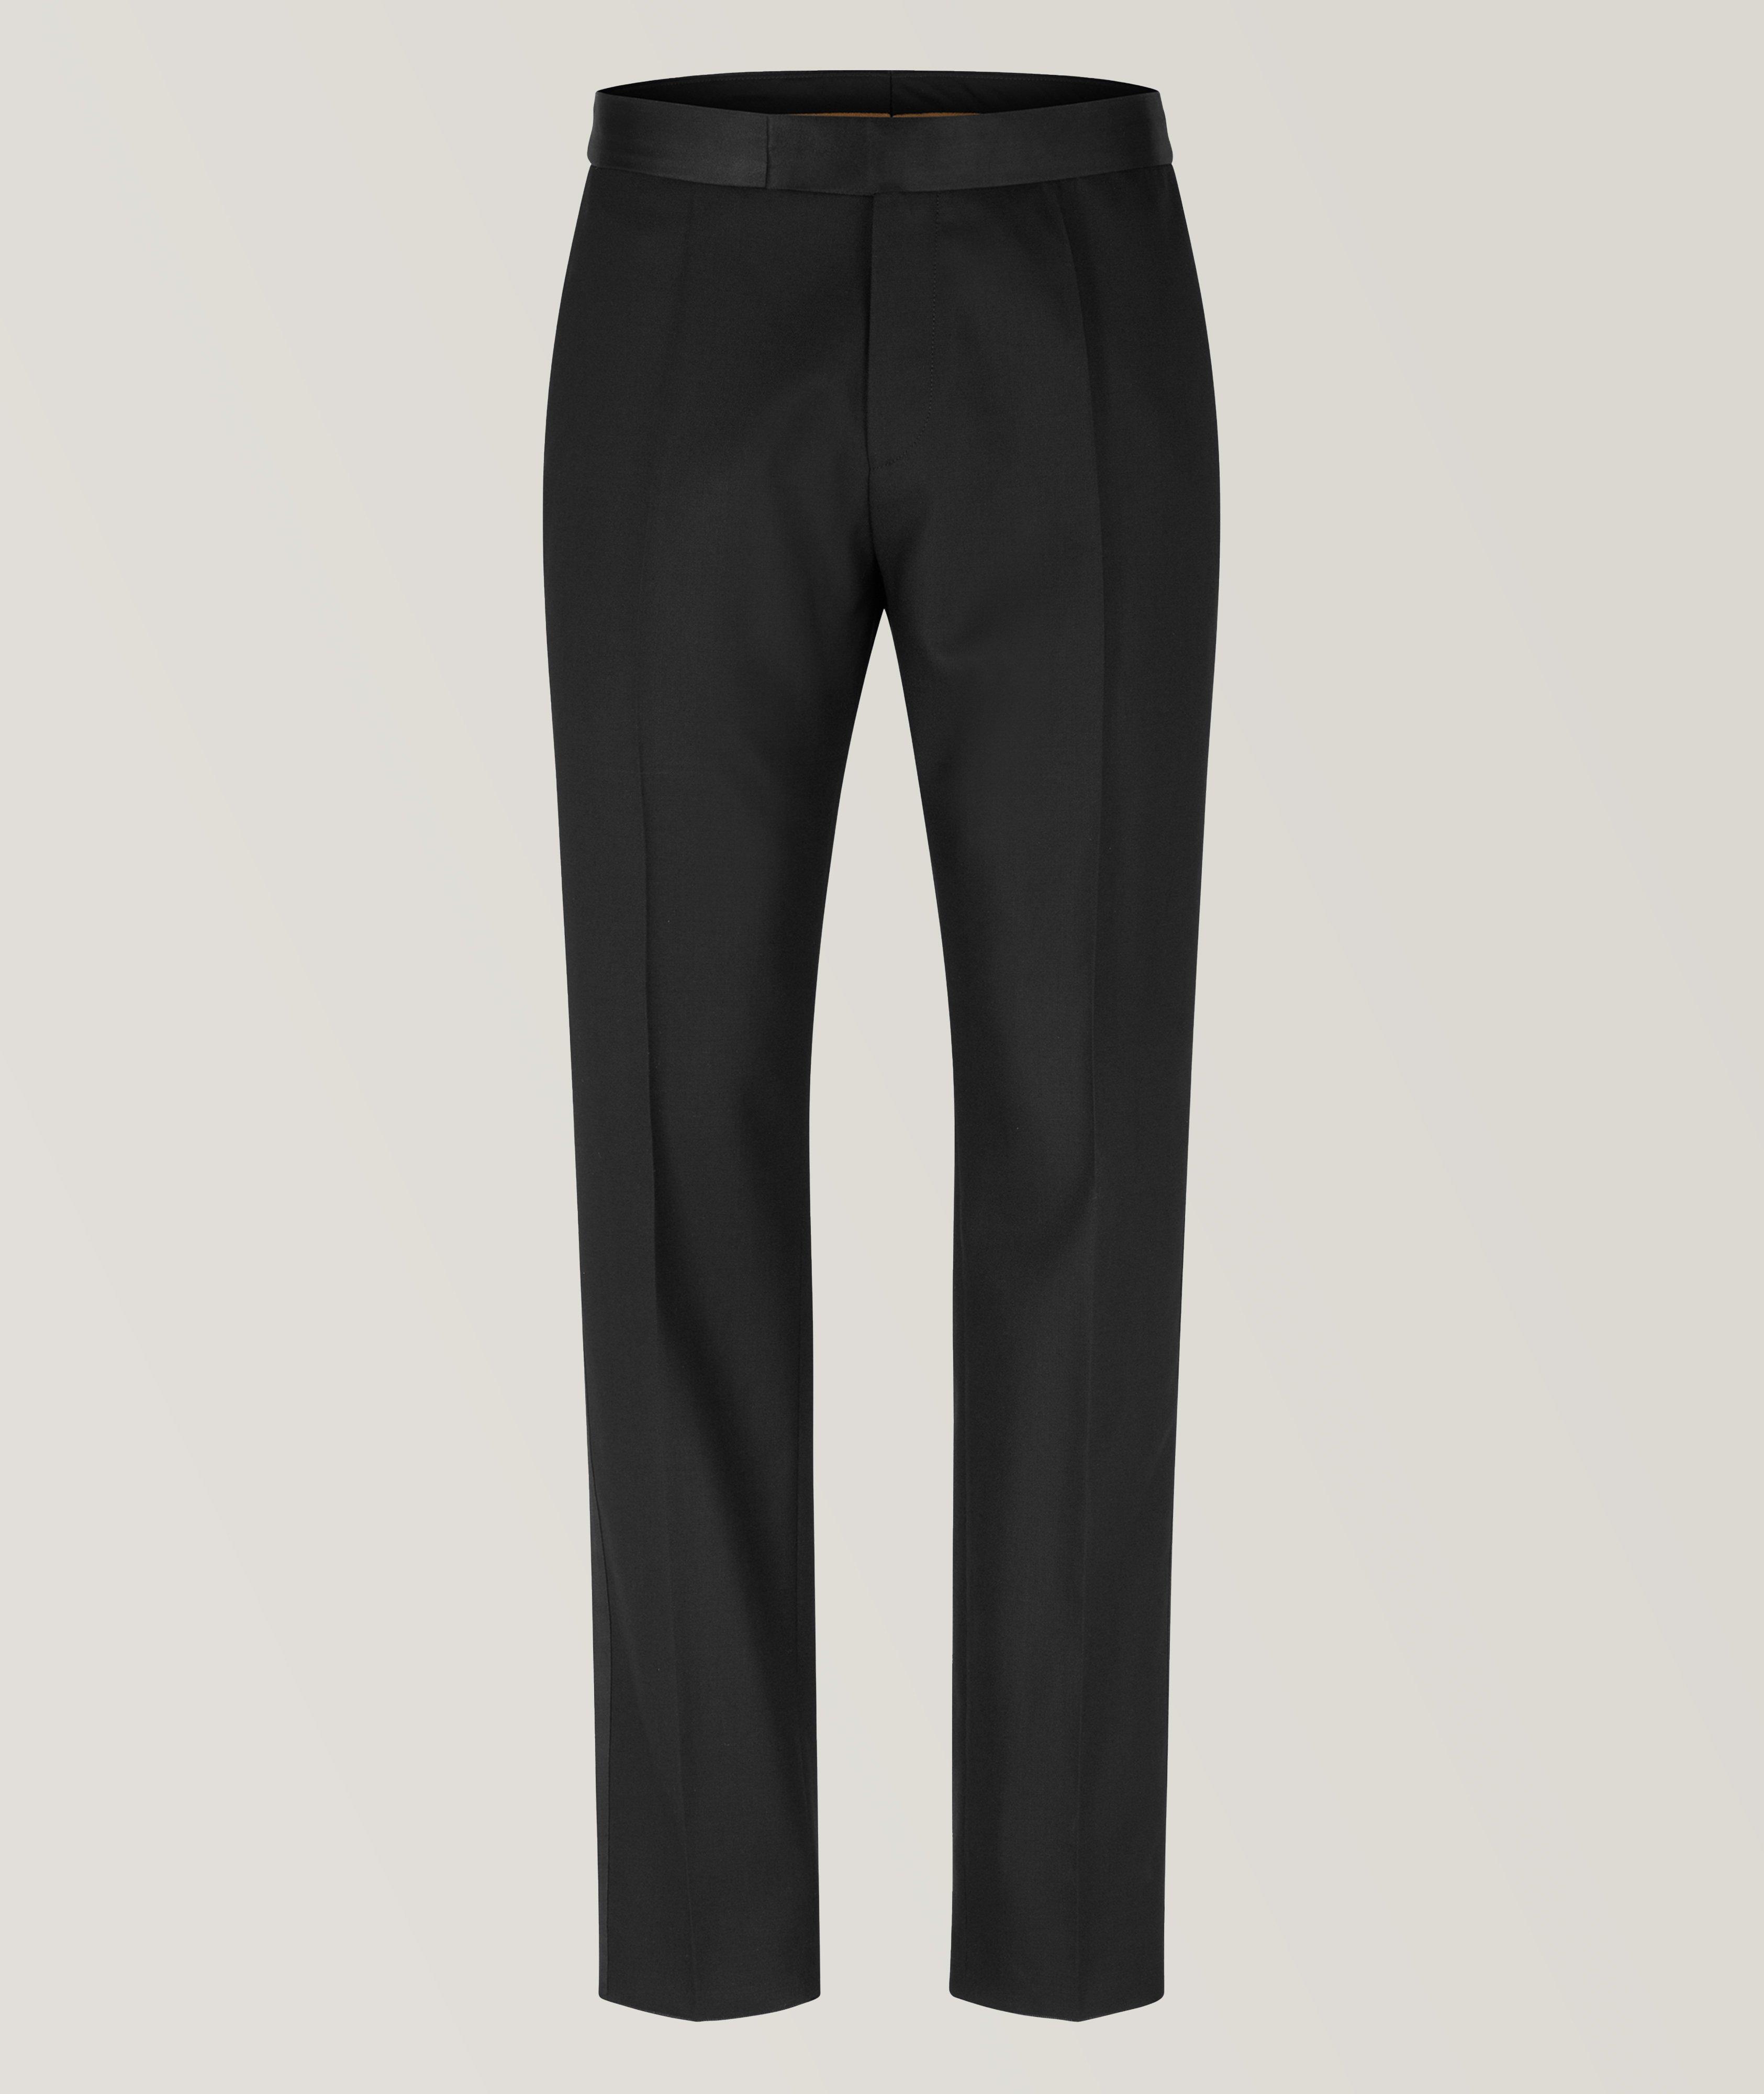 Slim-Fit Micro-Patterned Wool-Blend Dress Pants image 0